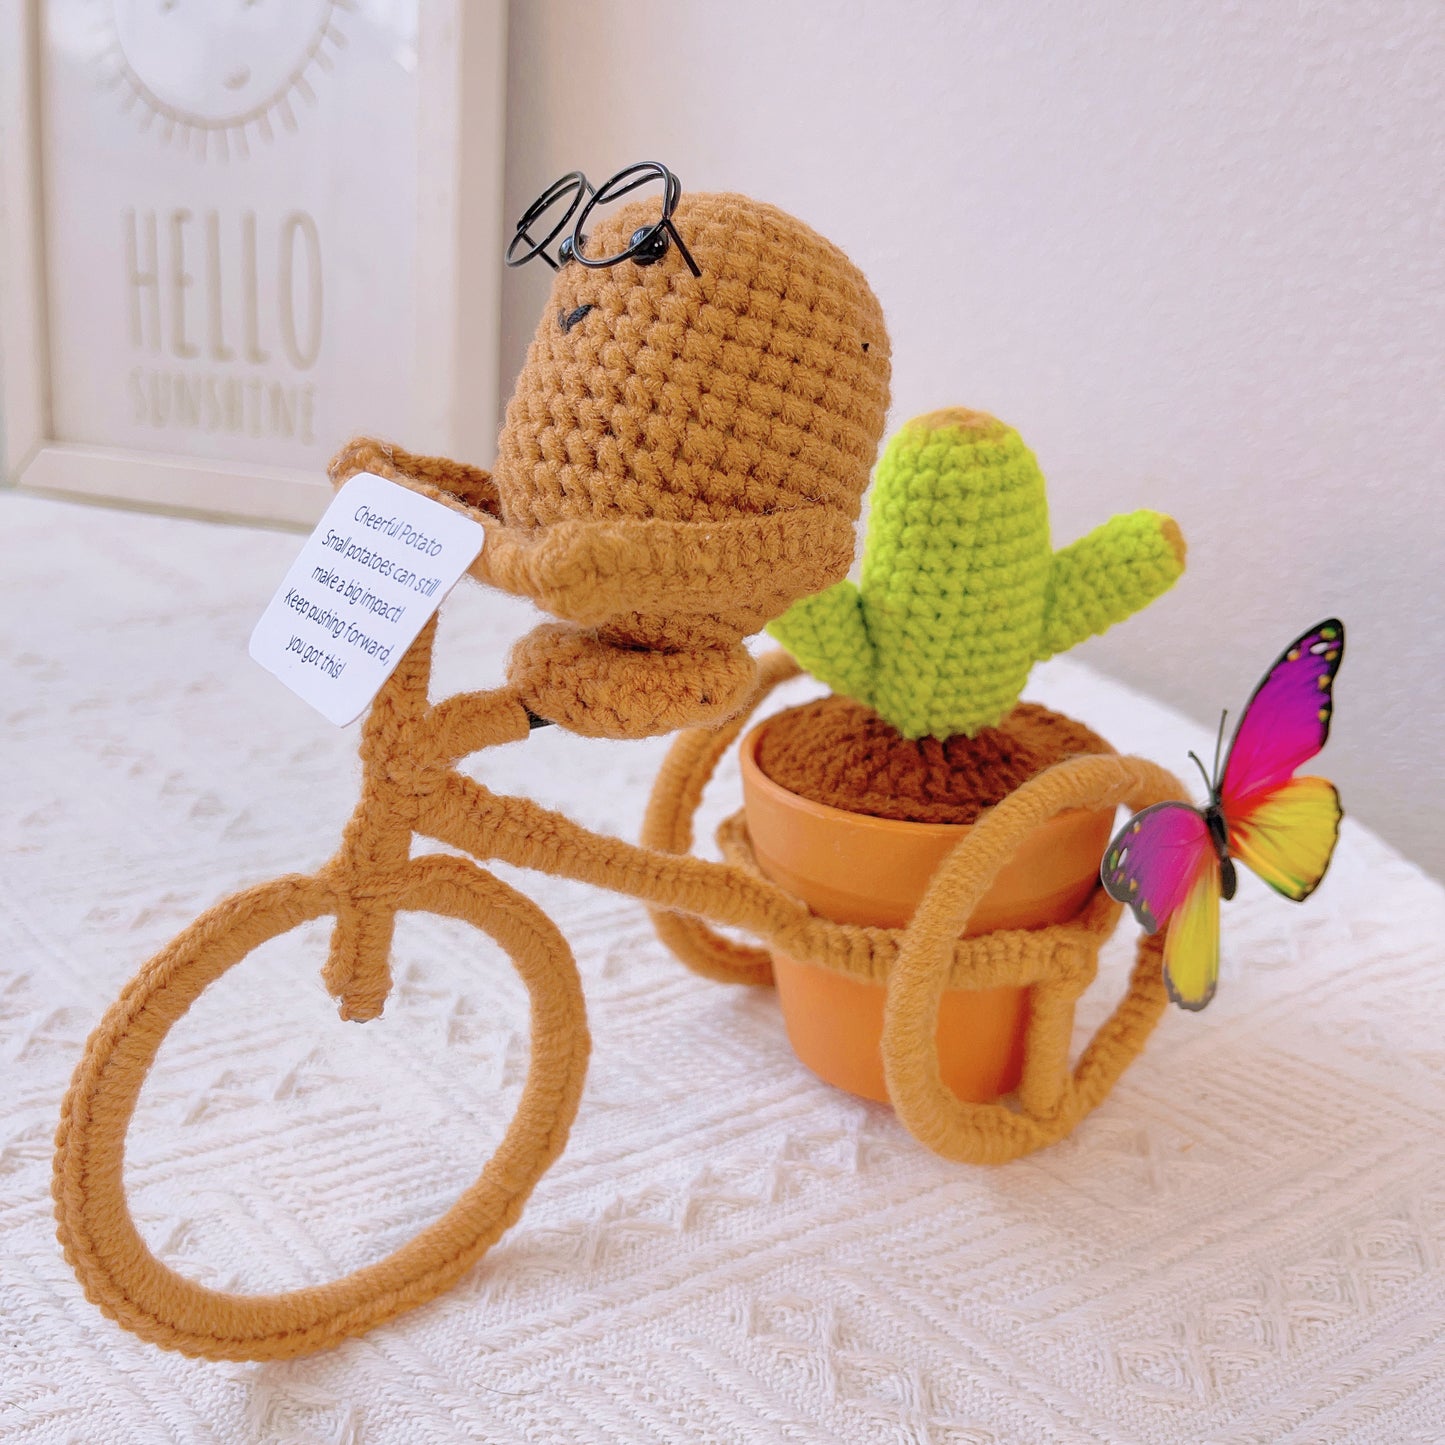 Hand-Crocheted Cheerful Potato Succulent Cactus Bicycle Décor - Unique Home Decoration Centerpiece Birthday Gift Desk Workspace